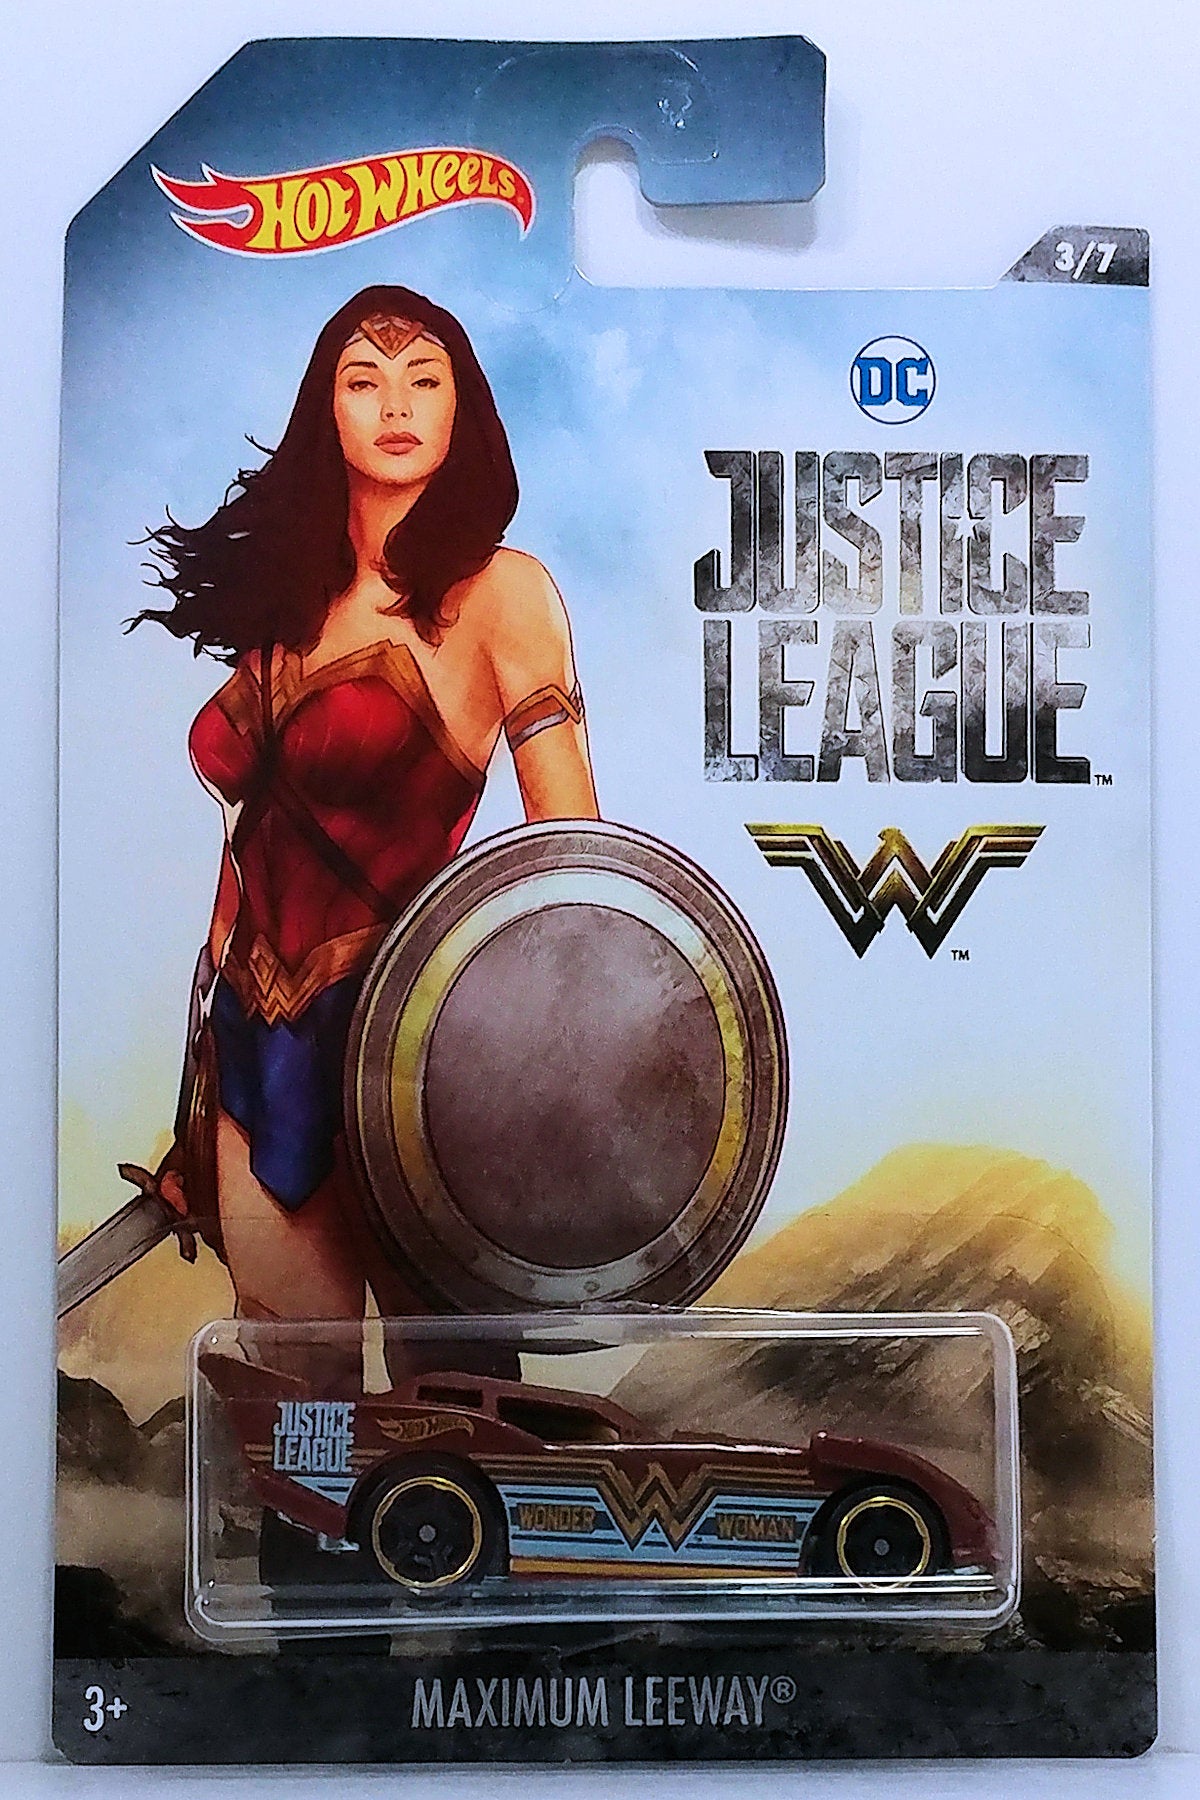 Hot Wheels 2018 - DC Comics / Justice League # 3/7 - Maximum Leeway - Brown / Wonder Woman Graphics - Gold & Black MC5 Wheels - Black & Tan Interior - Metal Base - Walmart Exclusive